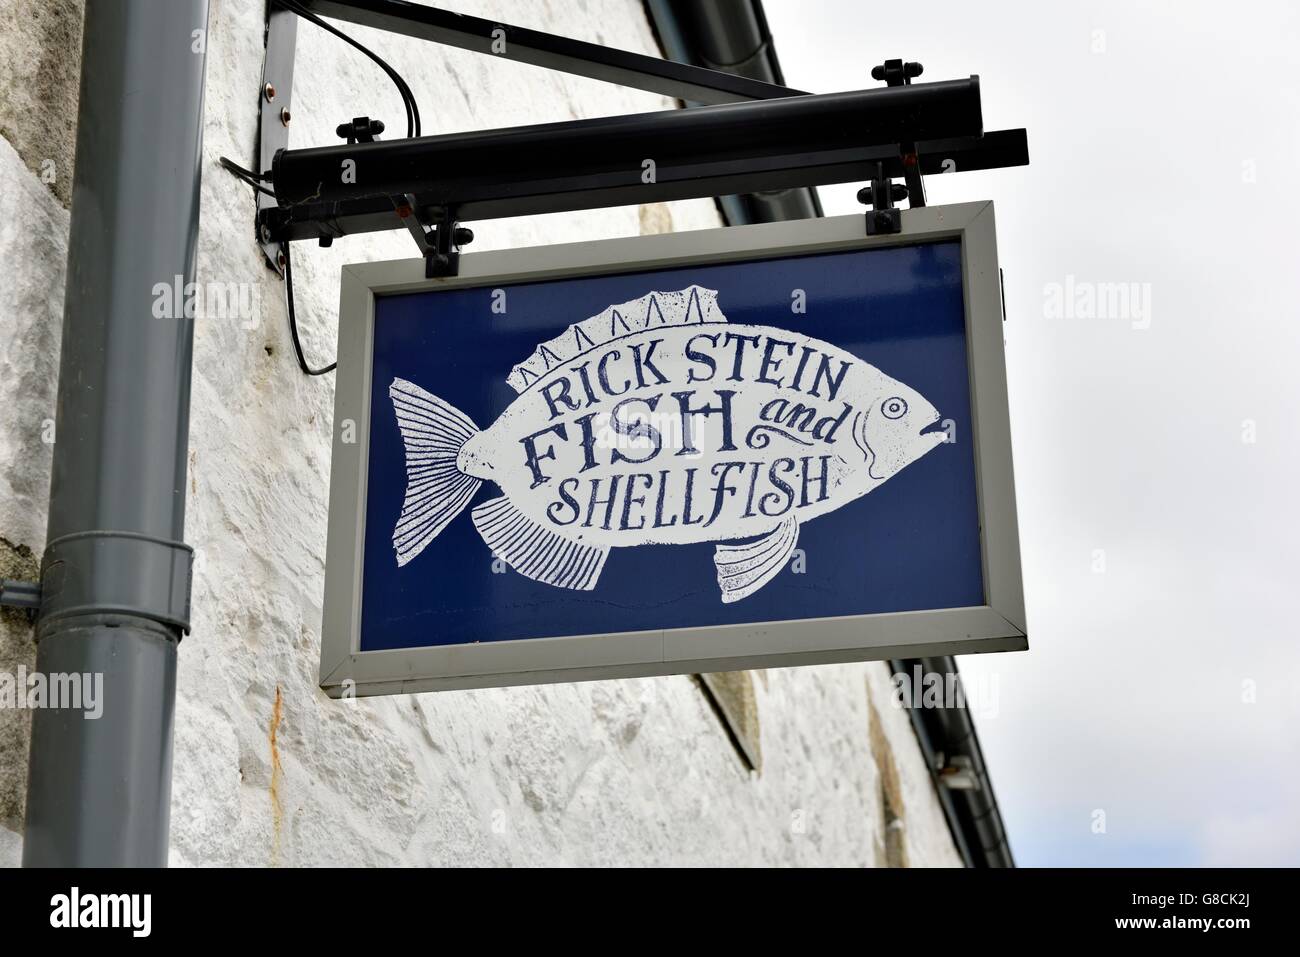 Rick stein fish and shellfish Restaurant sign Porthleven Cornwall England UK Stock Photo